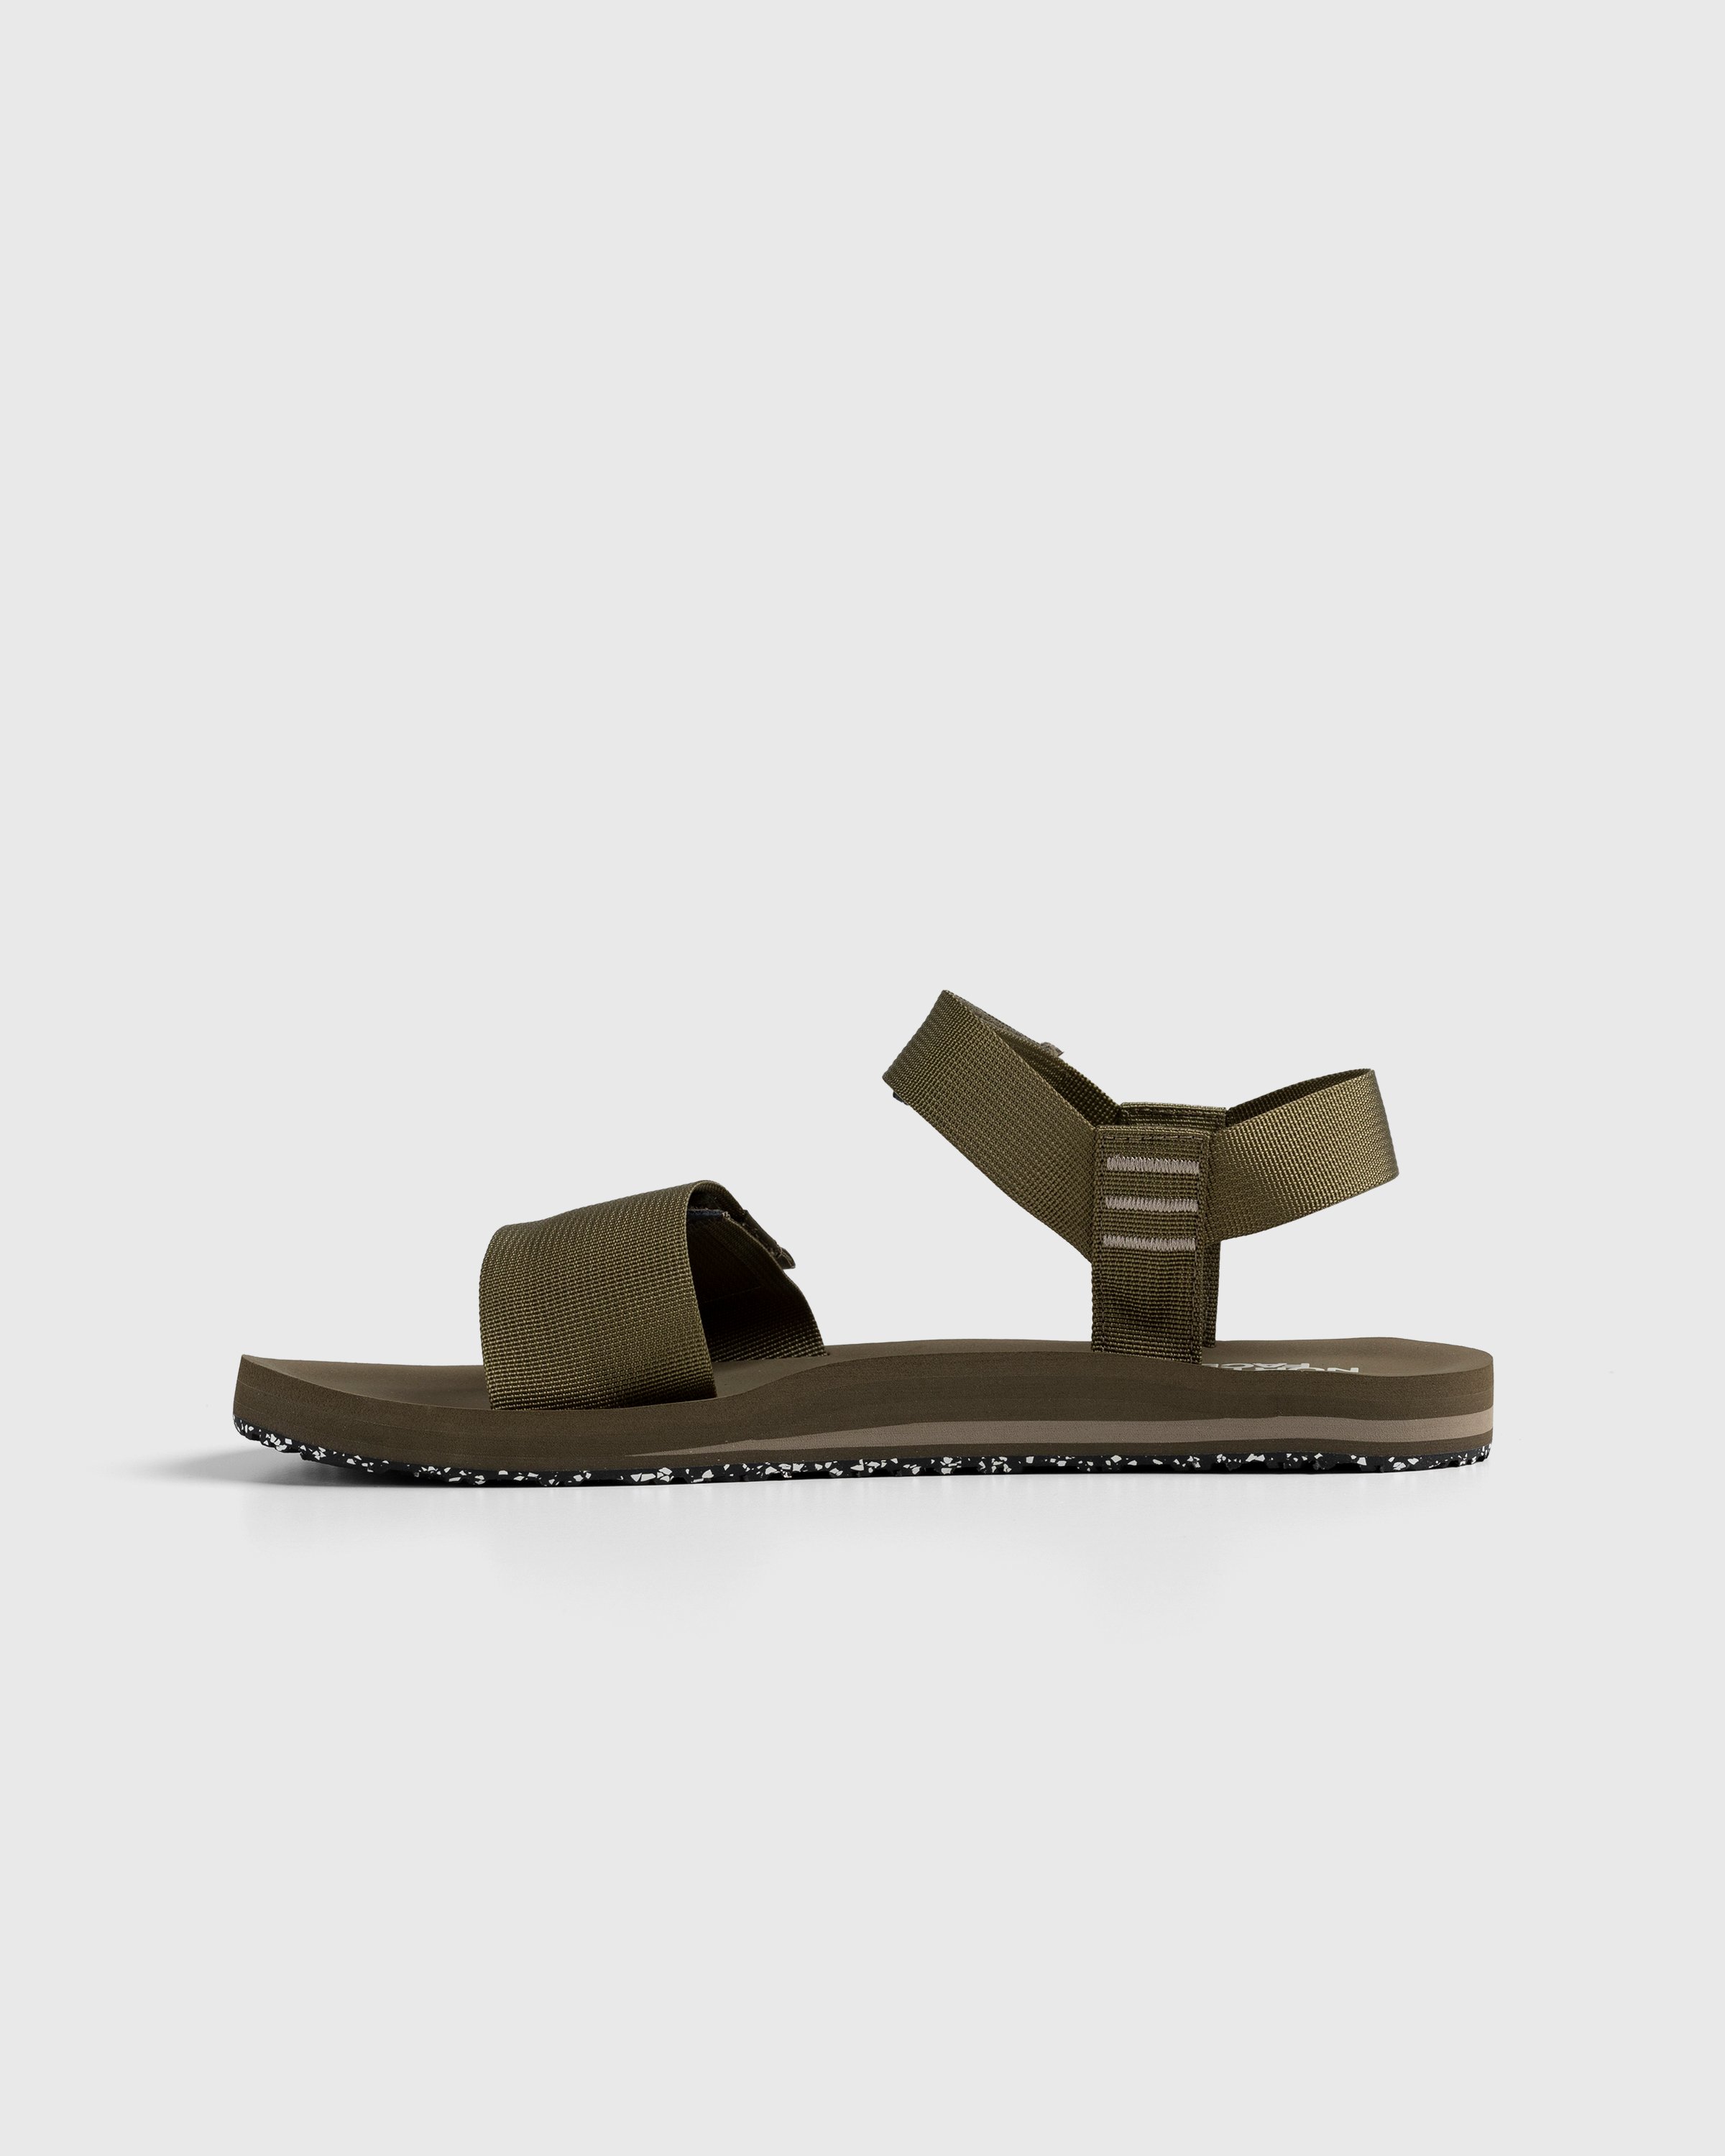 The North Face - Skeena Sport Sandal Militaryolive/Mineralgrey - Footwear - Green - Image 2